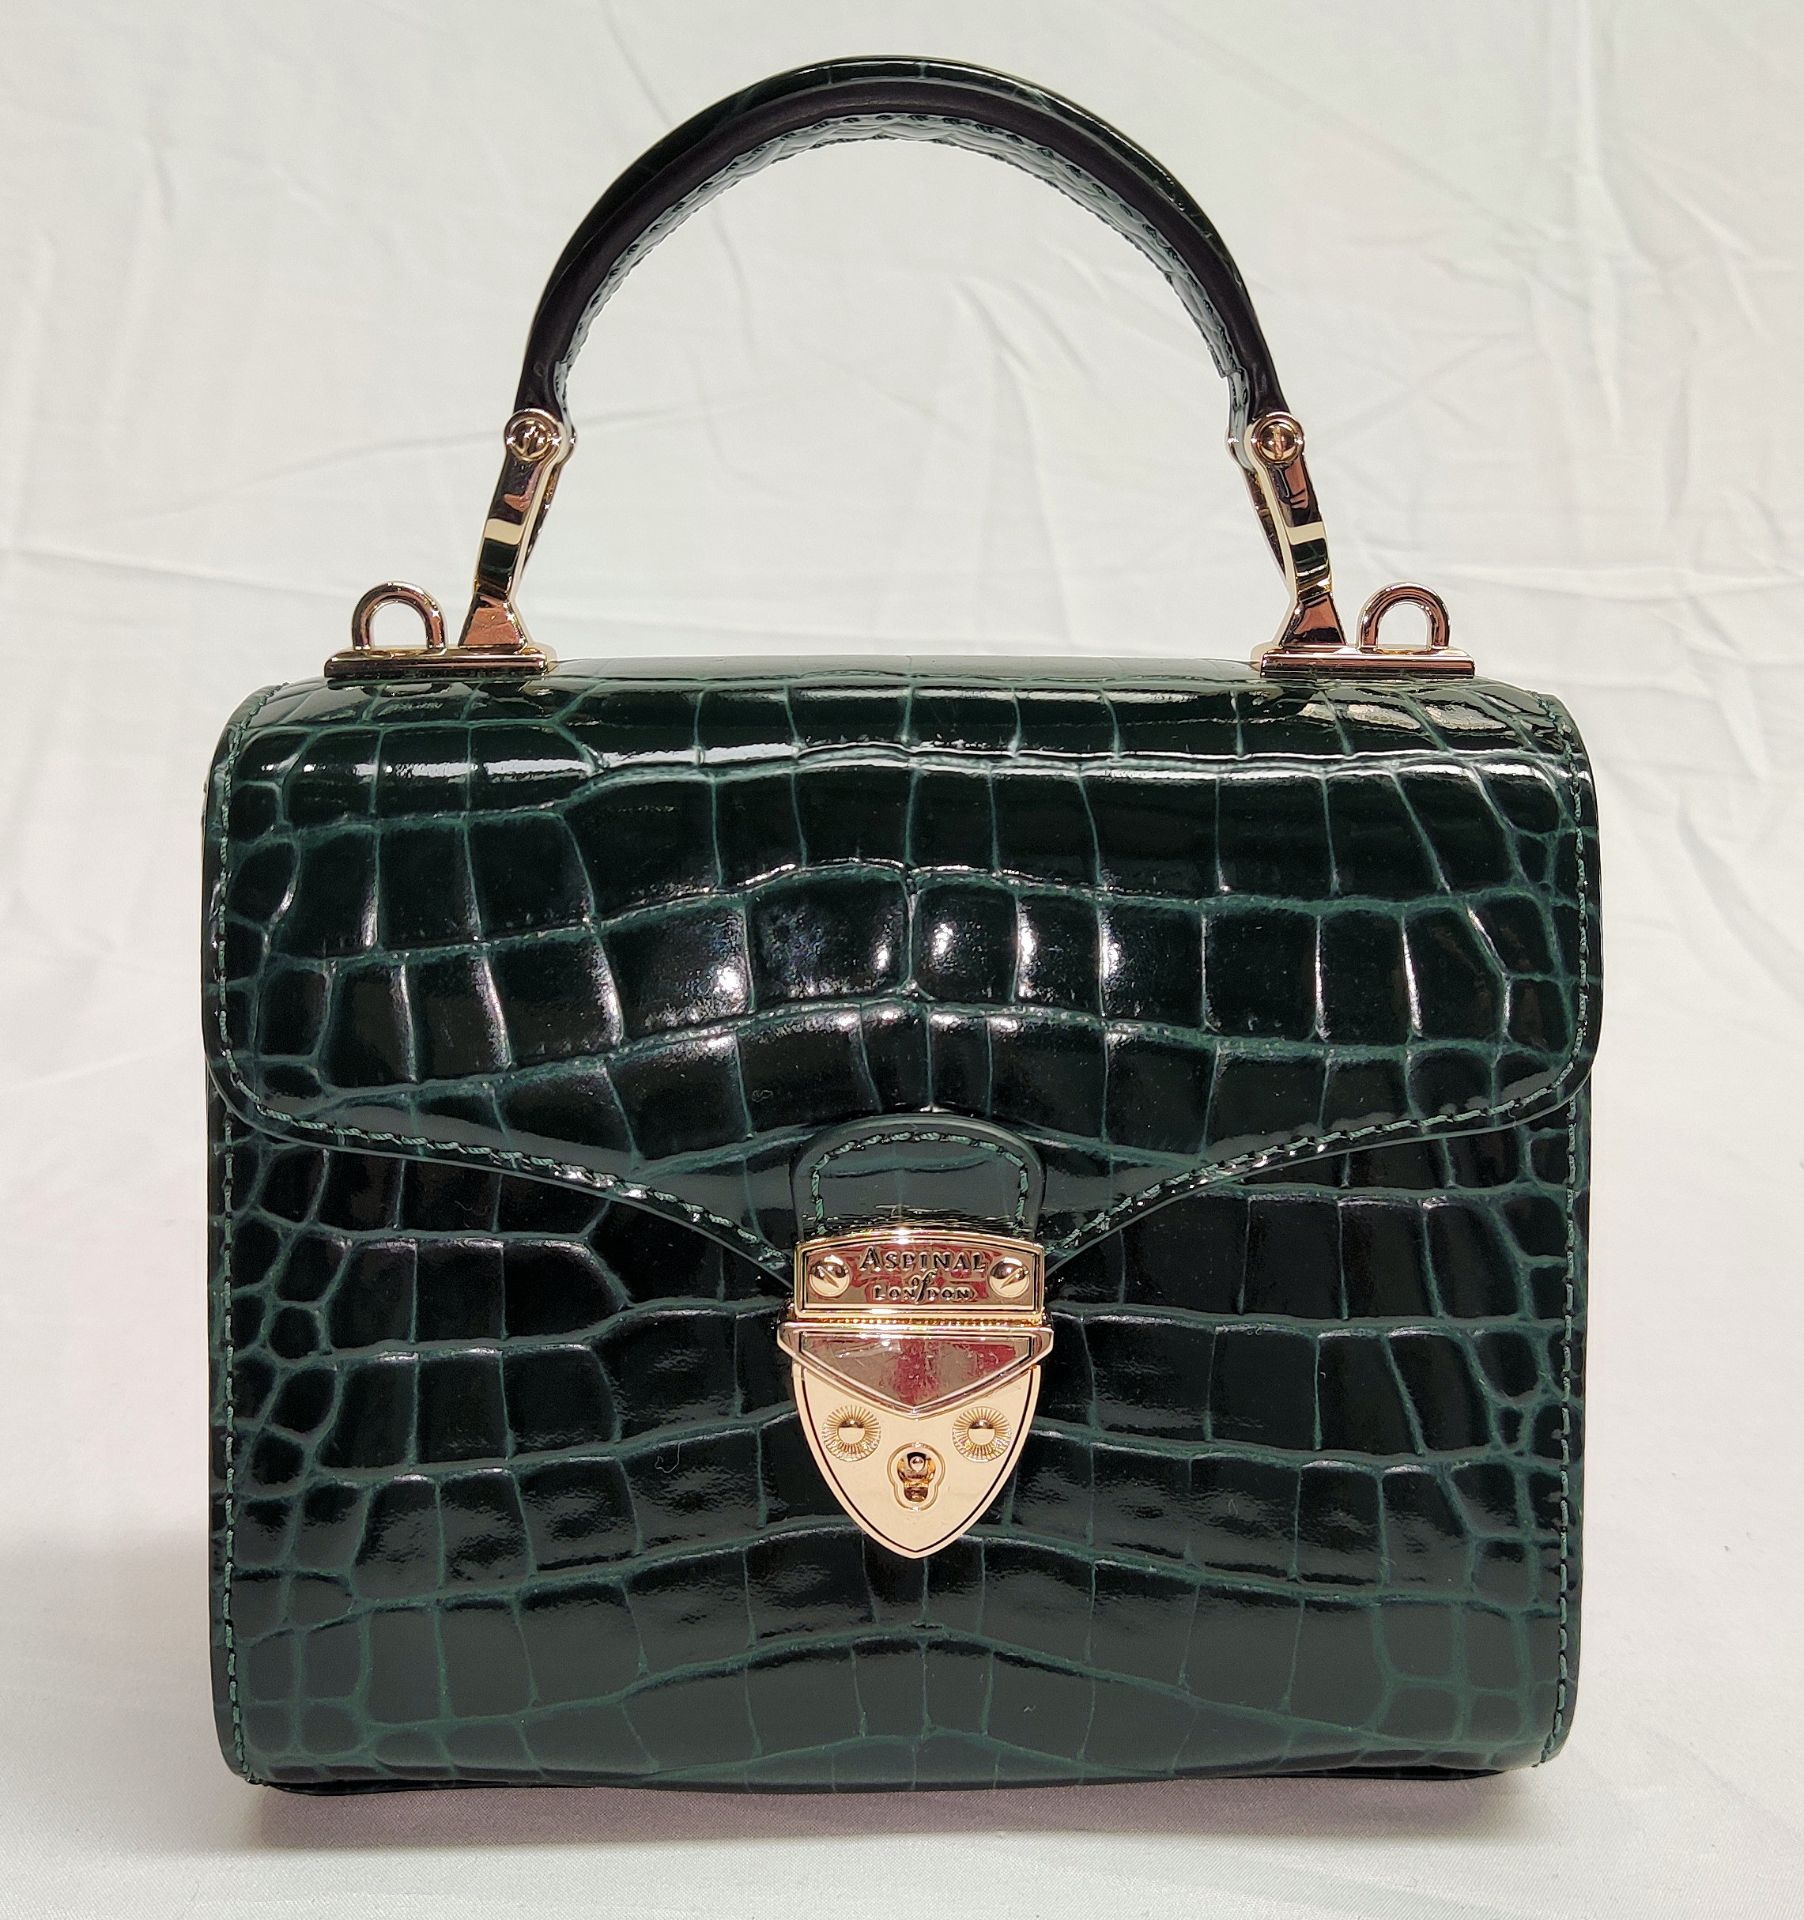 1 x ASPINAL OF LONDON Mayfair Mini Bag - Evergreen Patent Croc - Boxed - Original RRP £495 - Ref: - Image 4 of 21